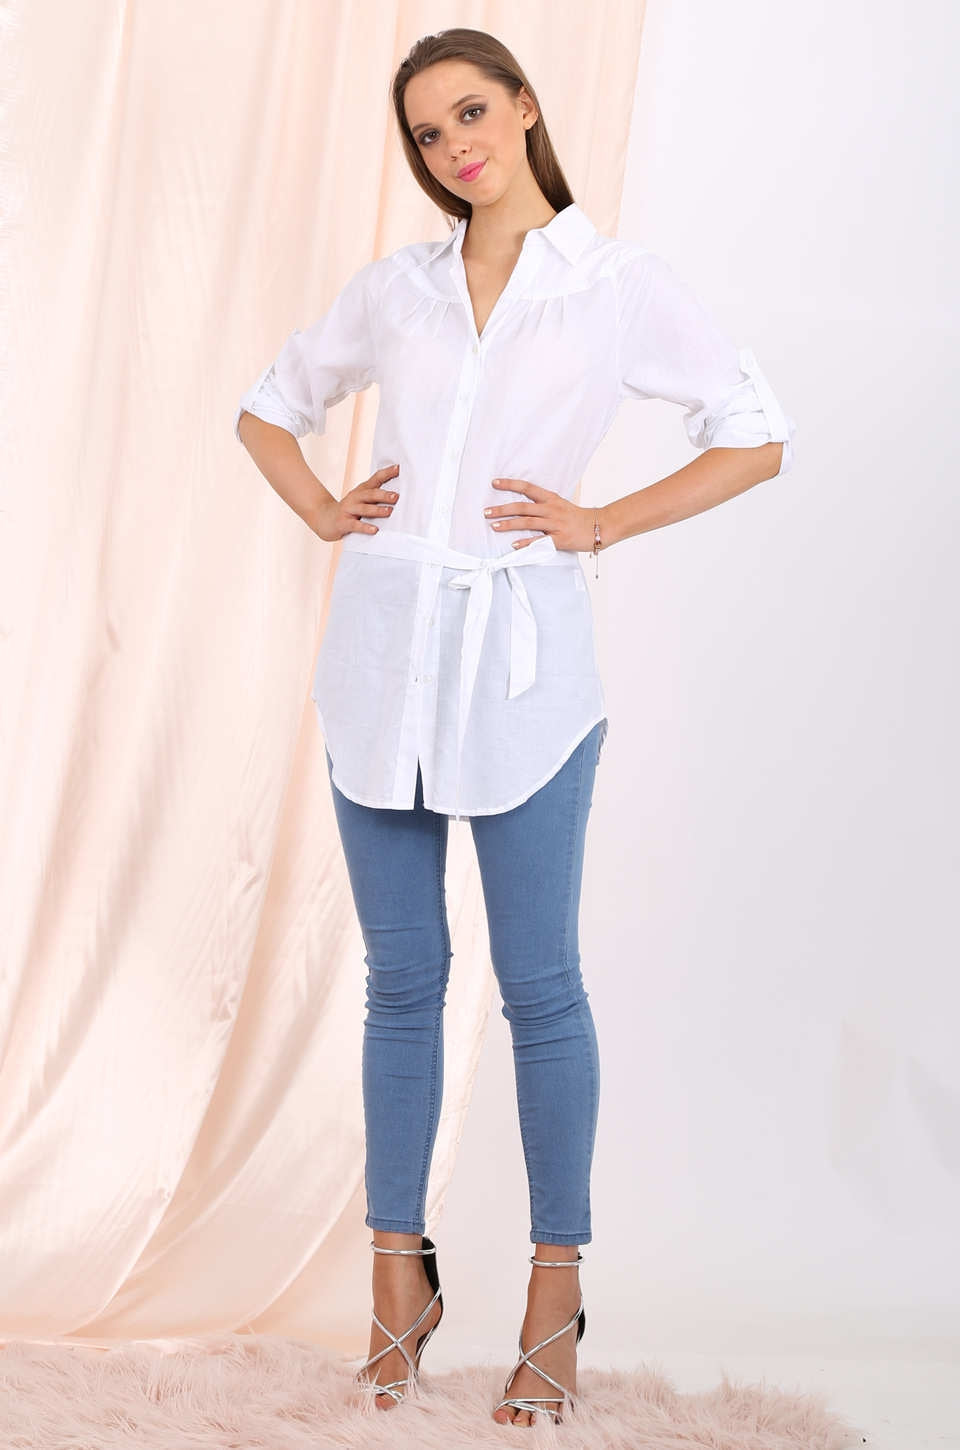 Callie long shirt in white